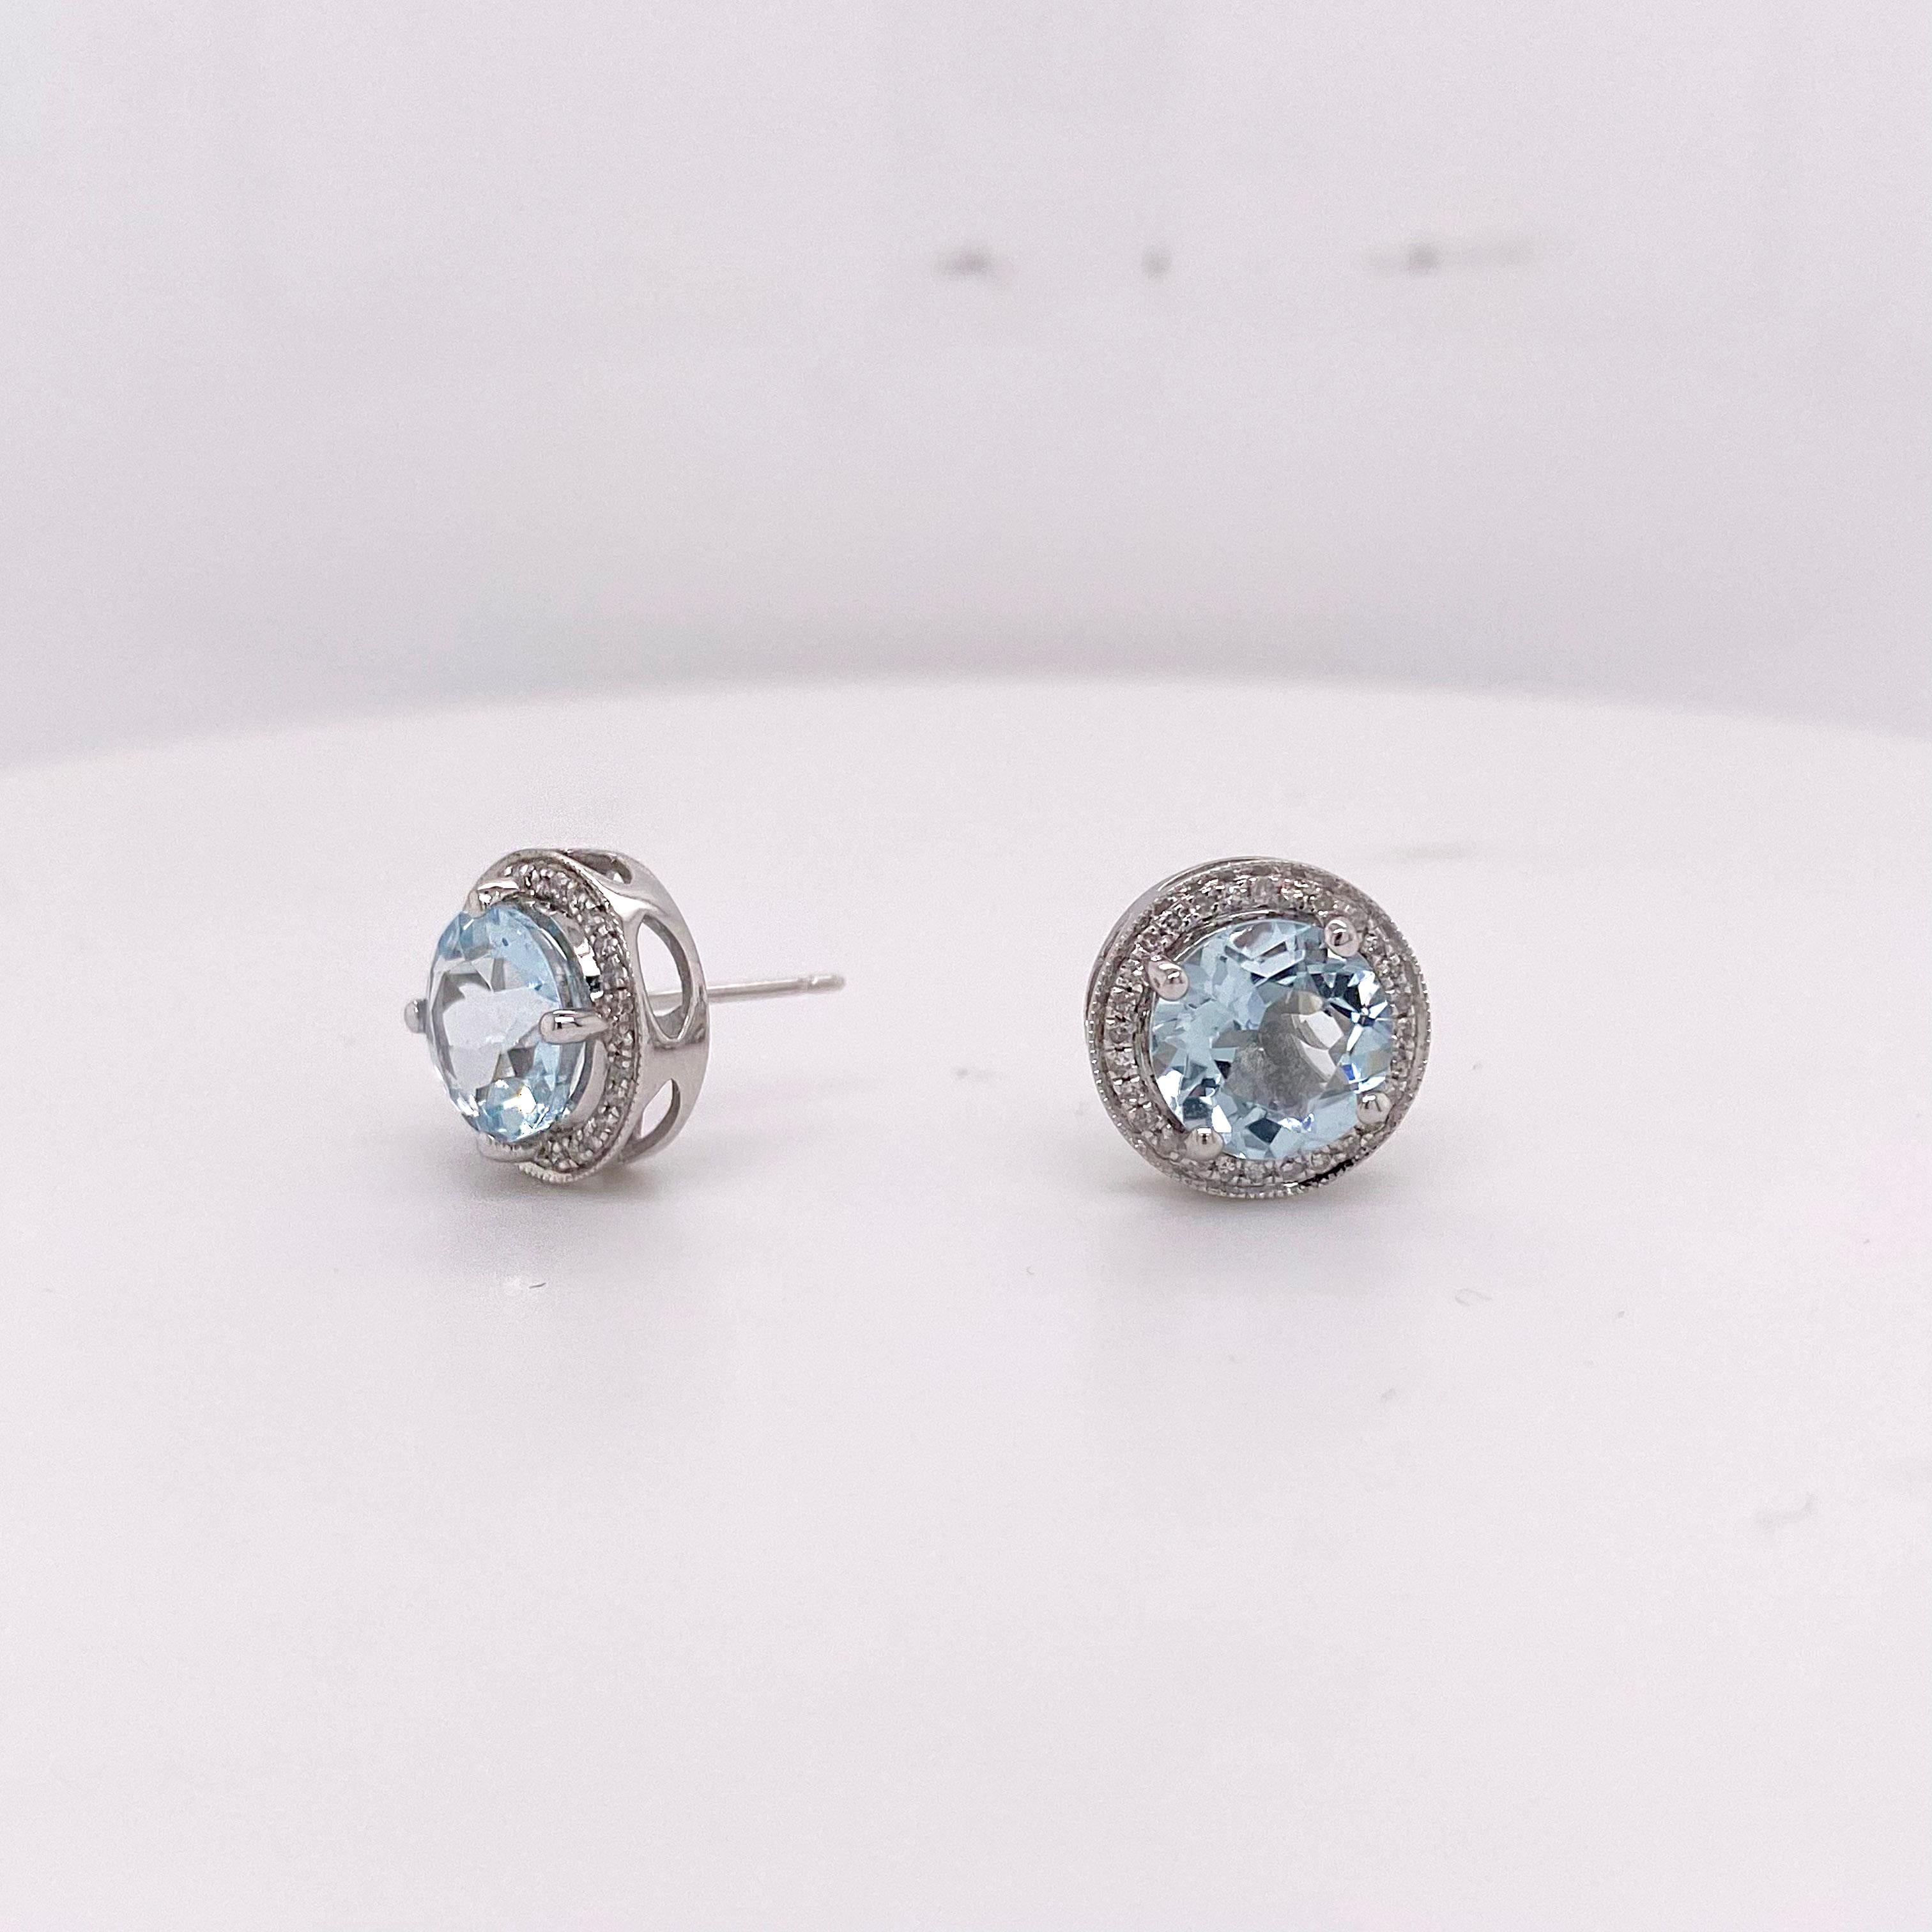 Modern Aquamarine Diamond Studs Earrings, Halo of Diamonds, 3.3.9 Carat Aqua Stones For Sale